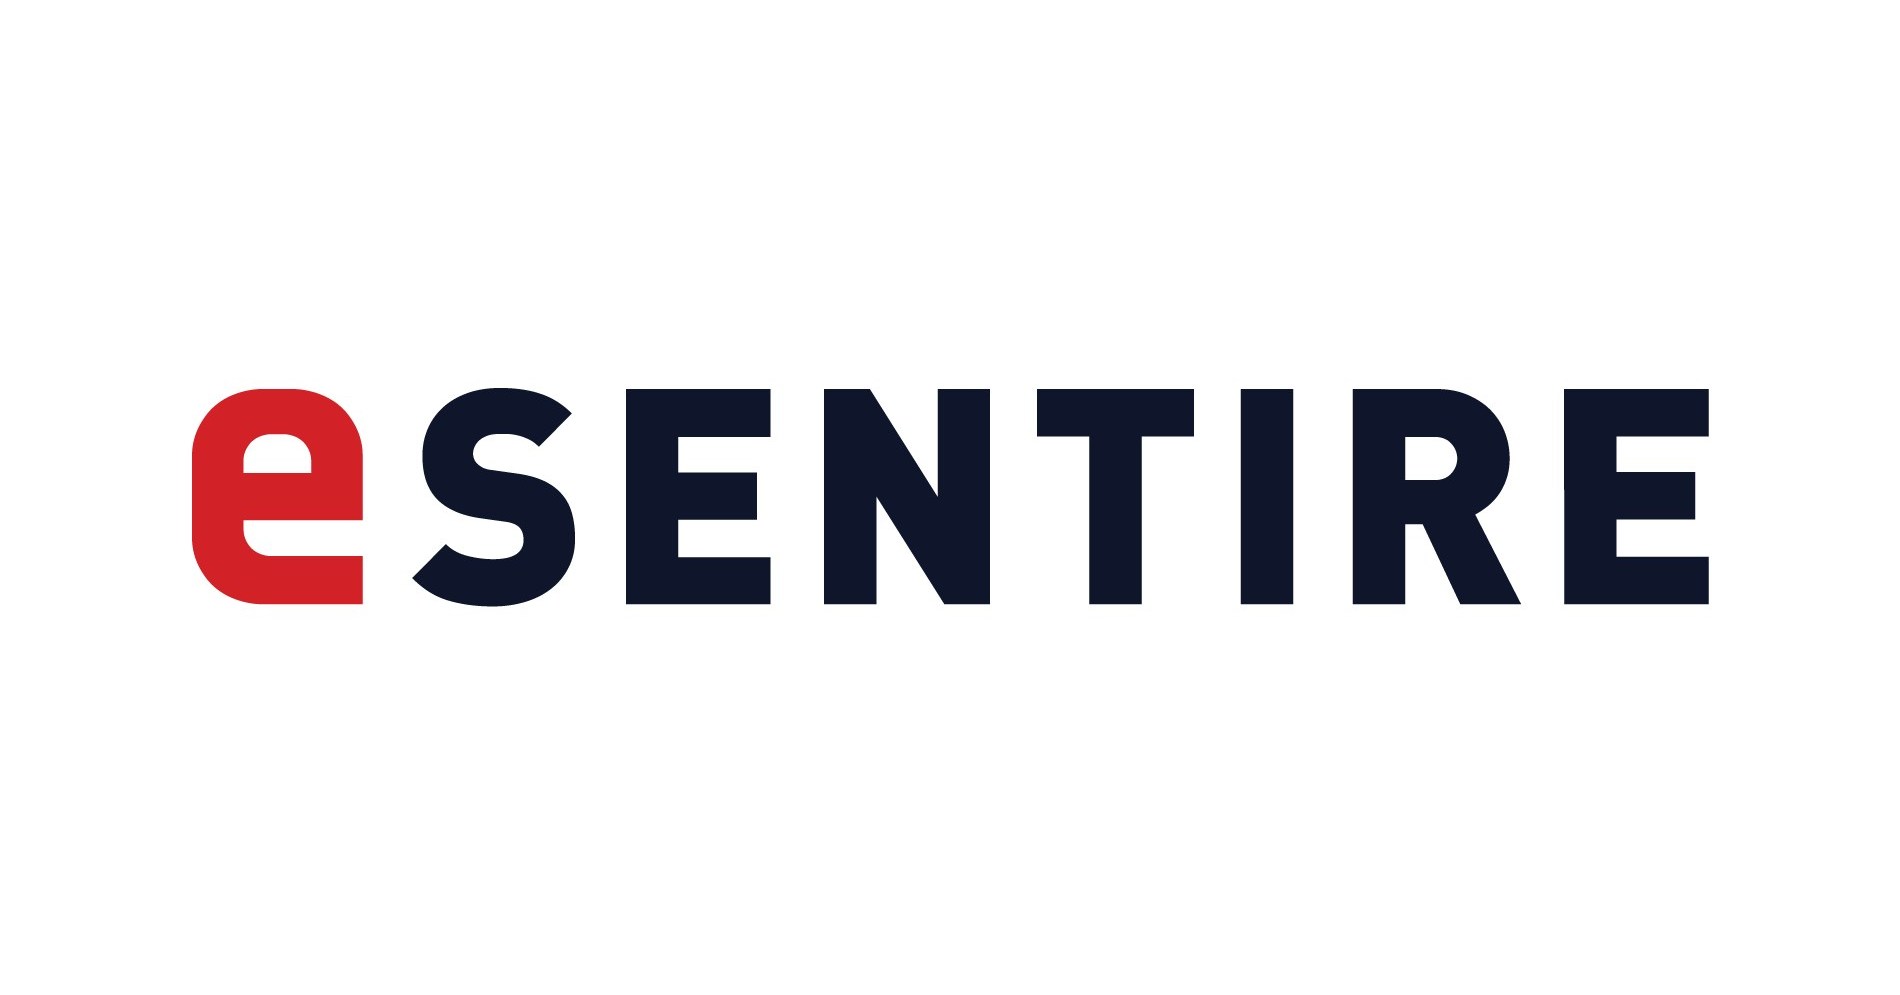 esentire - Cybersecurity Company in Canada 